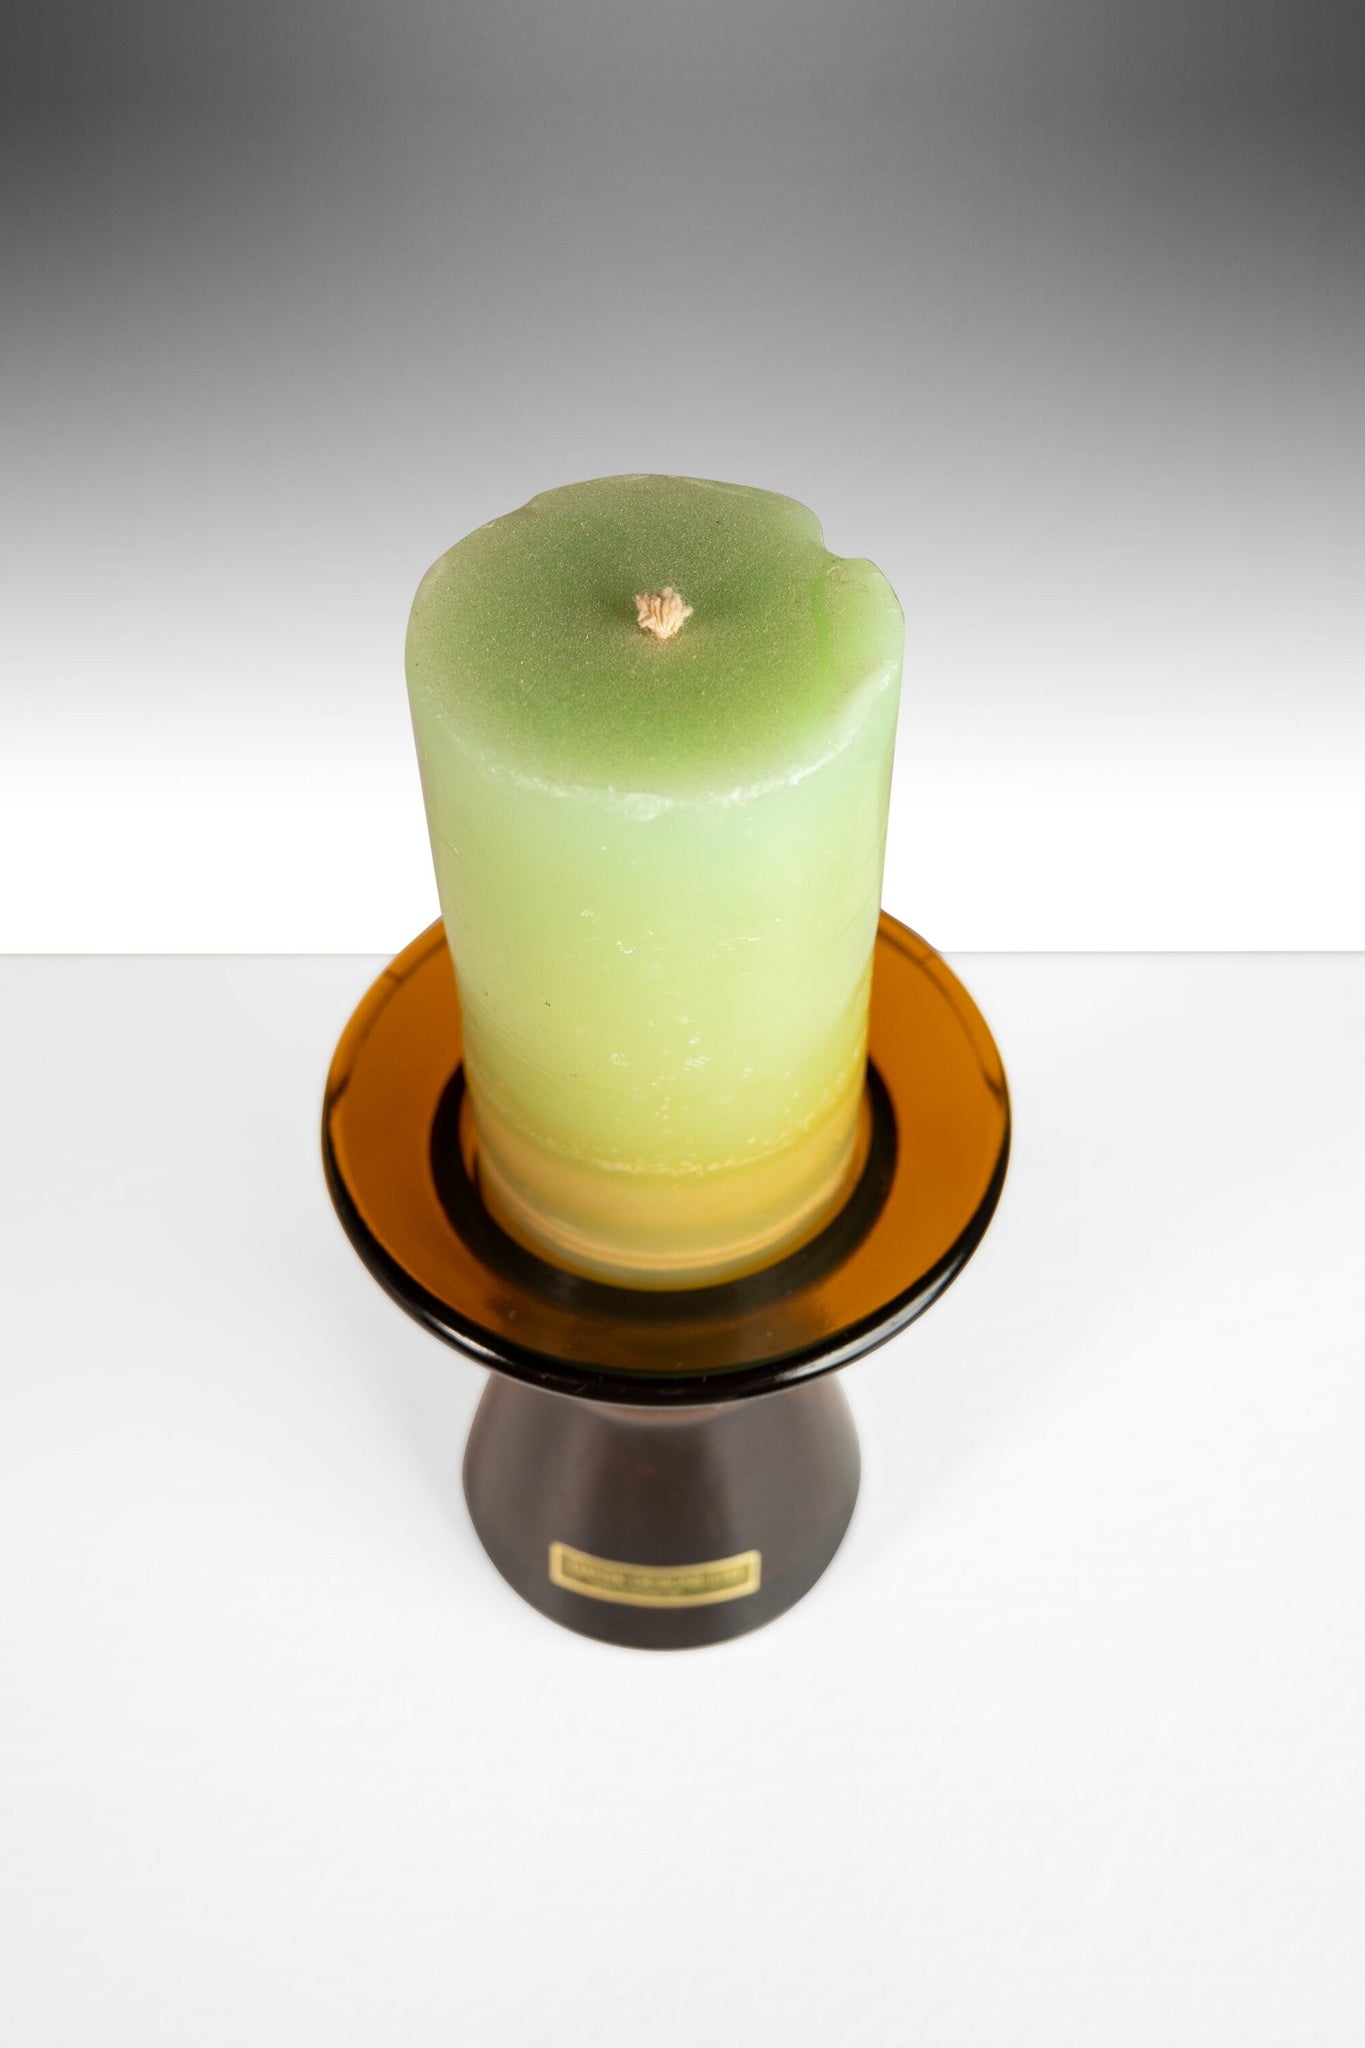 Modern Glass Cylinder Tealight Candle Holder